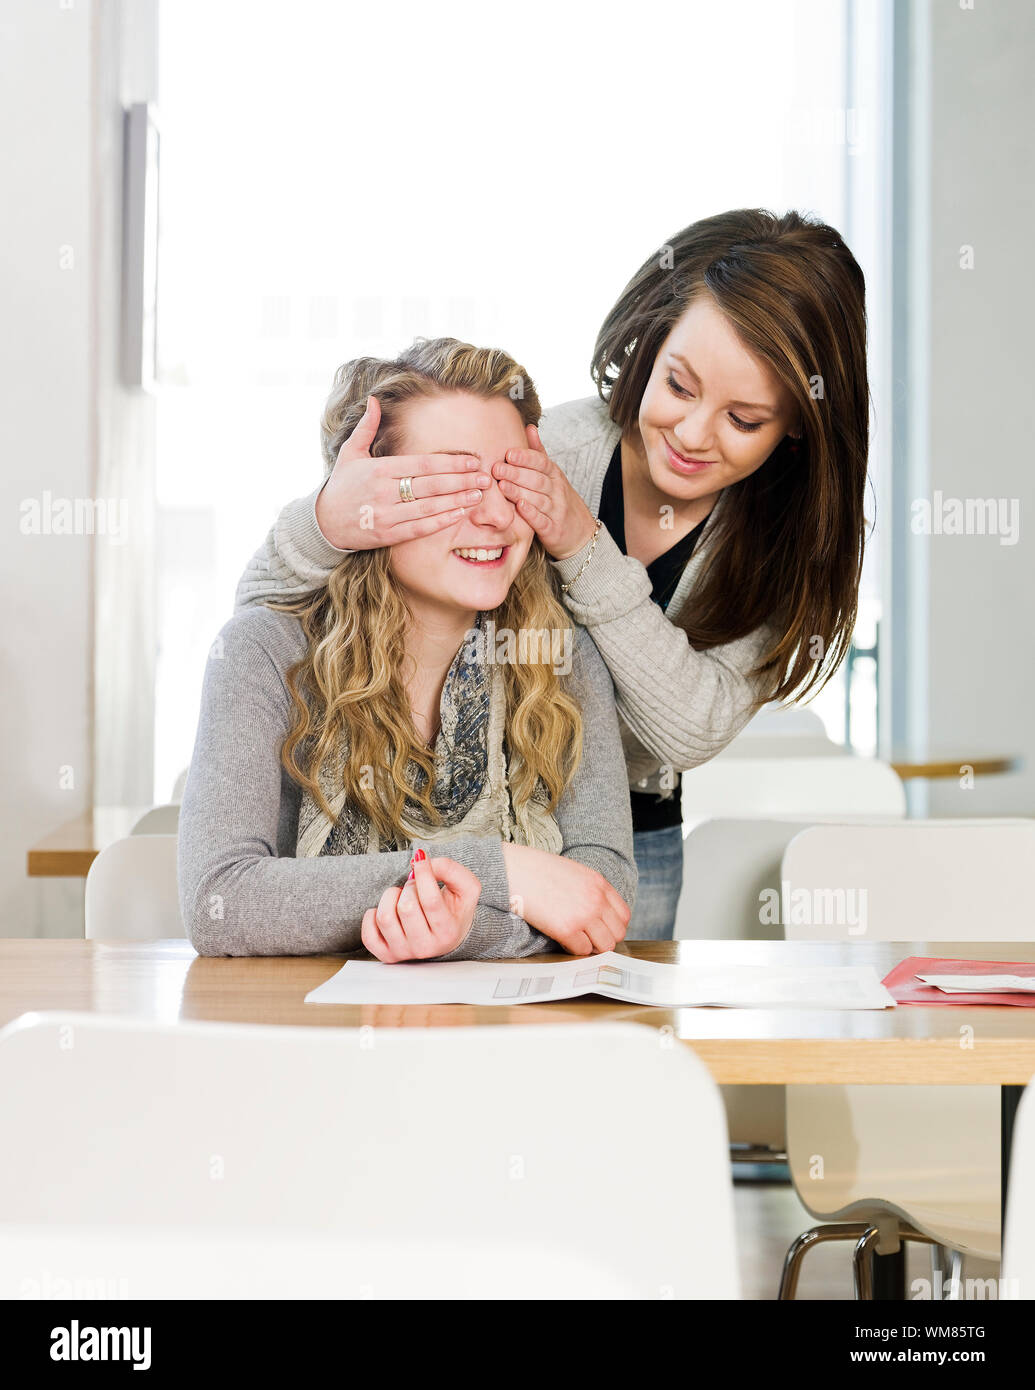 two girls playing peek a boo Stock Photo